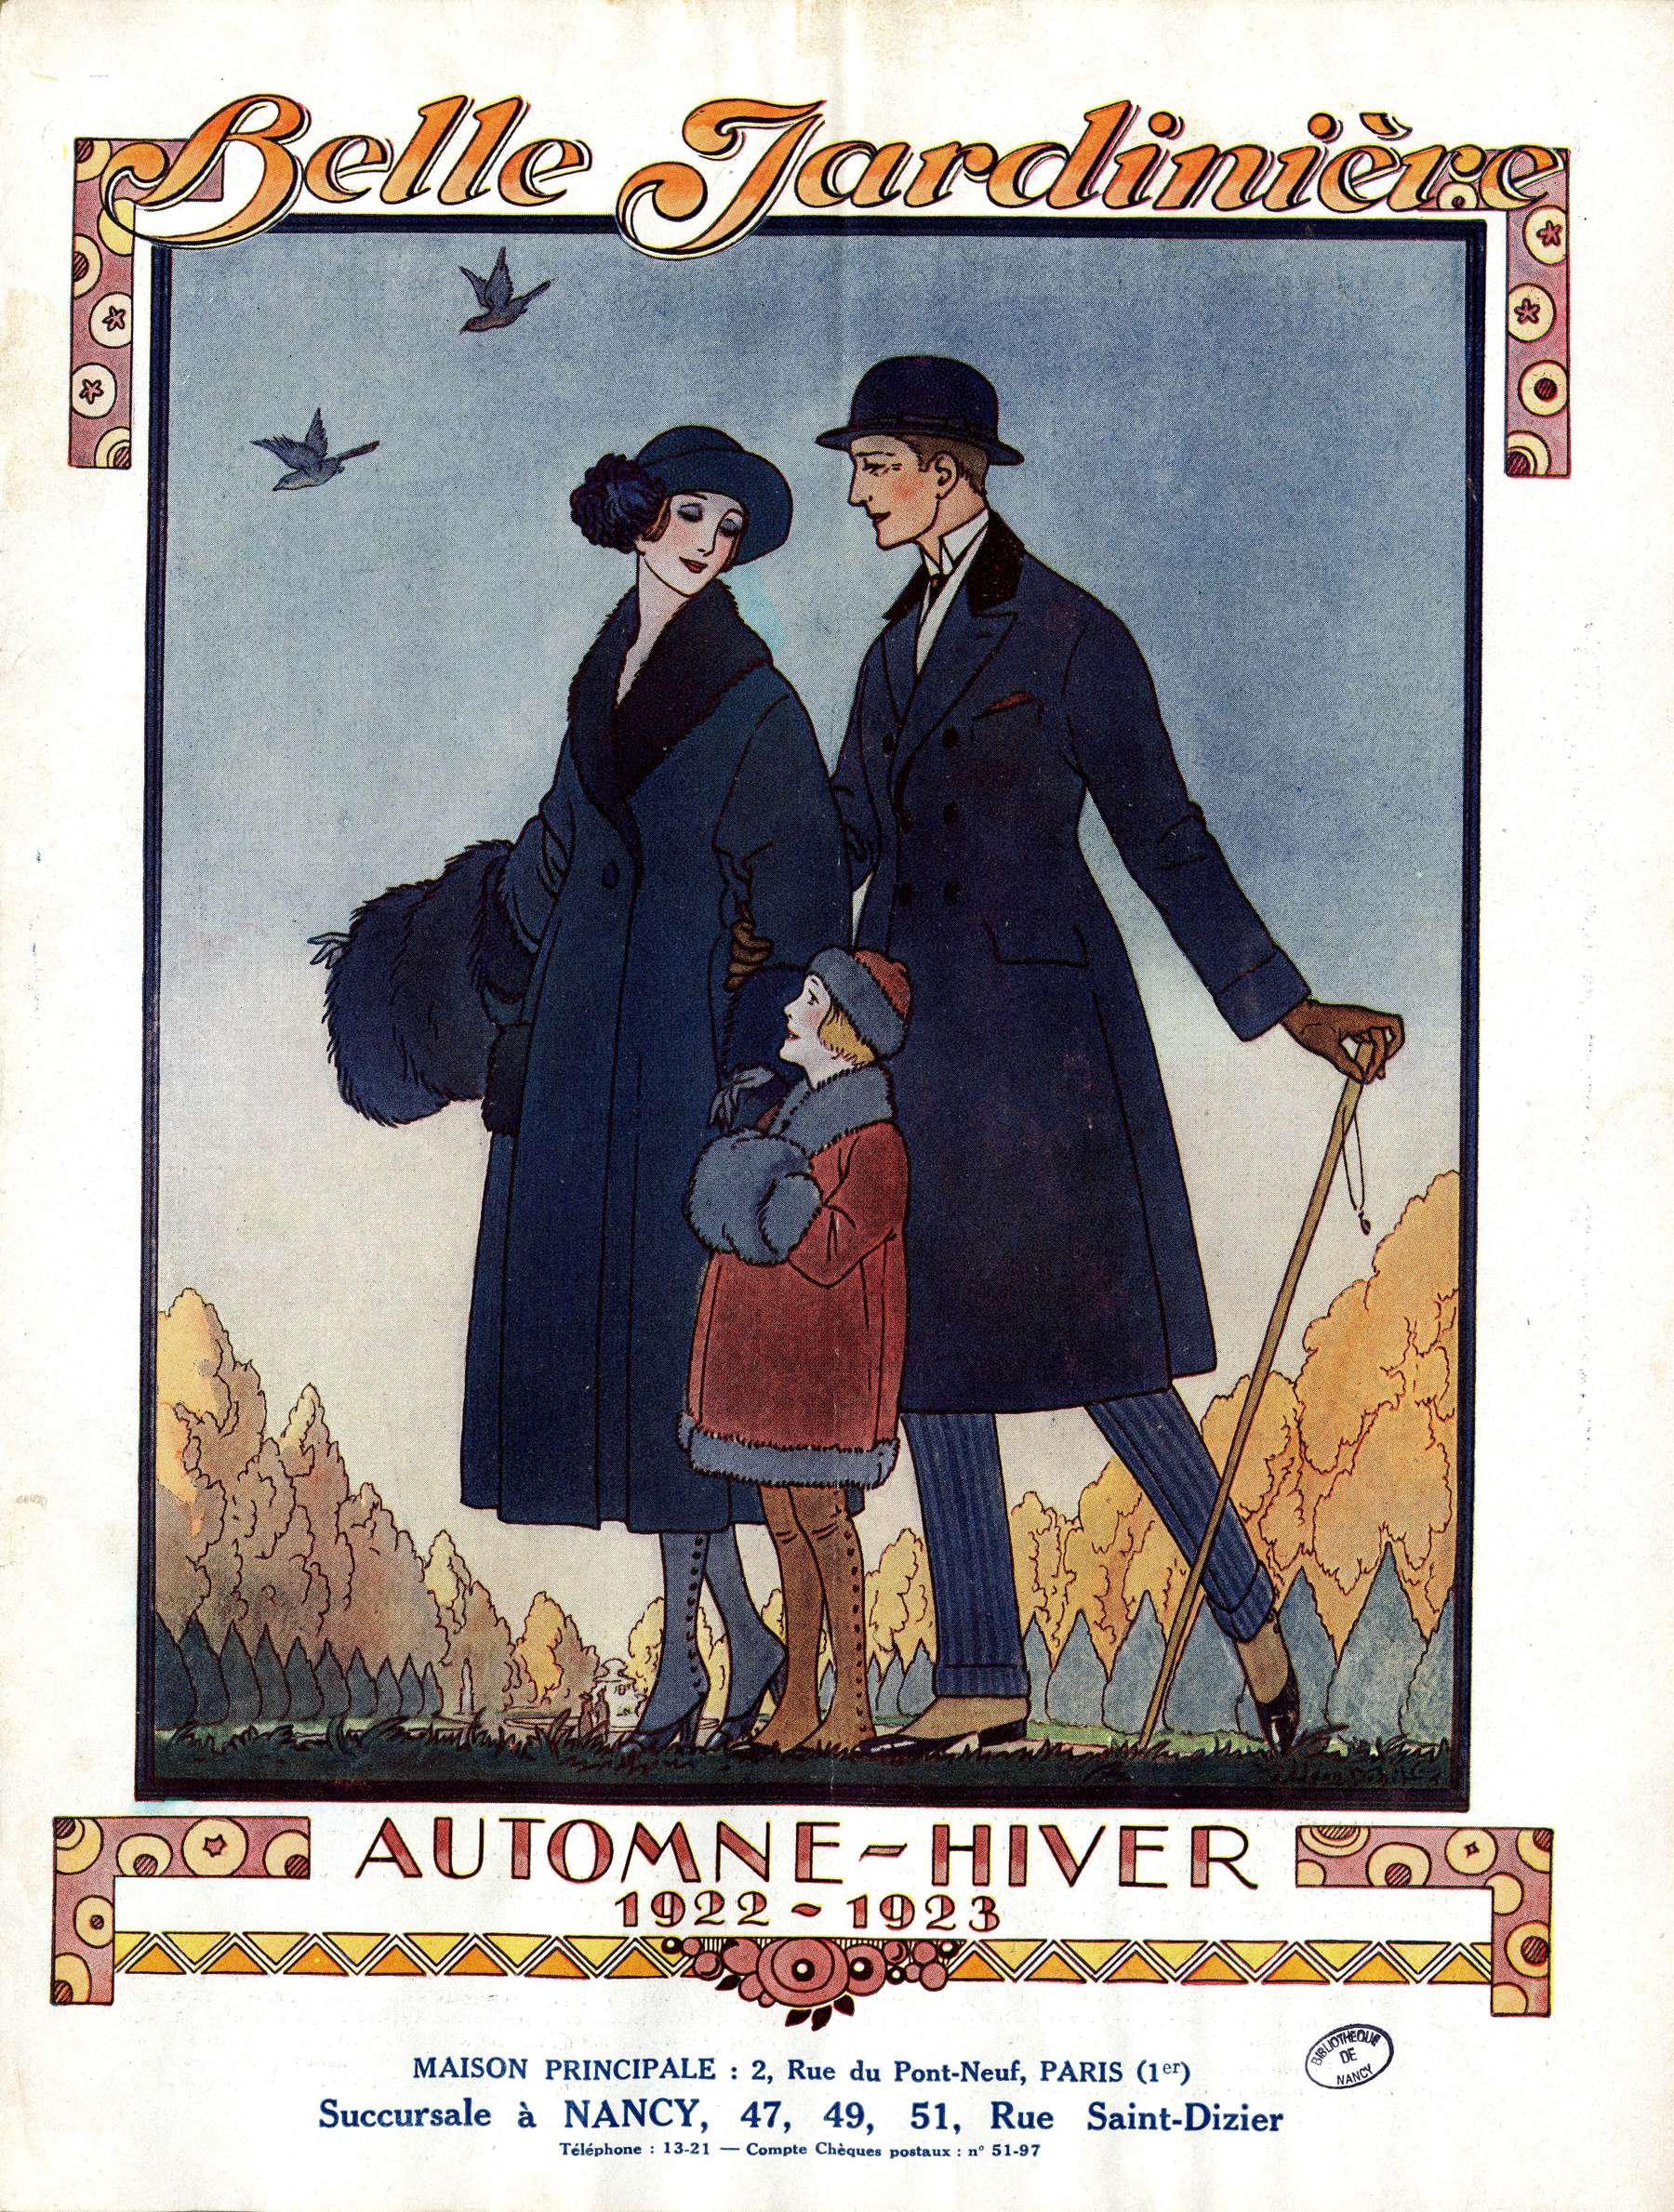 Contenu du Automne-hiver 1922-1923